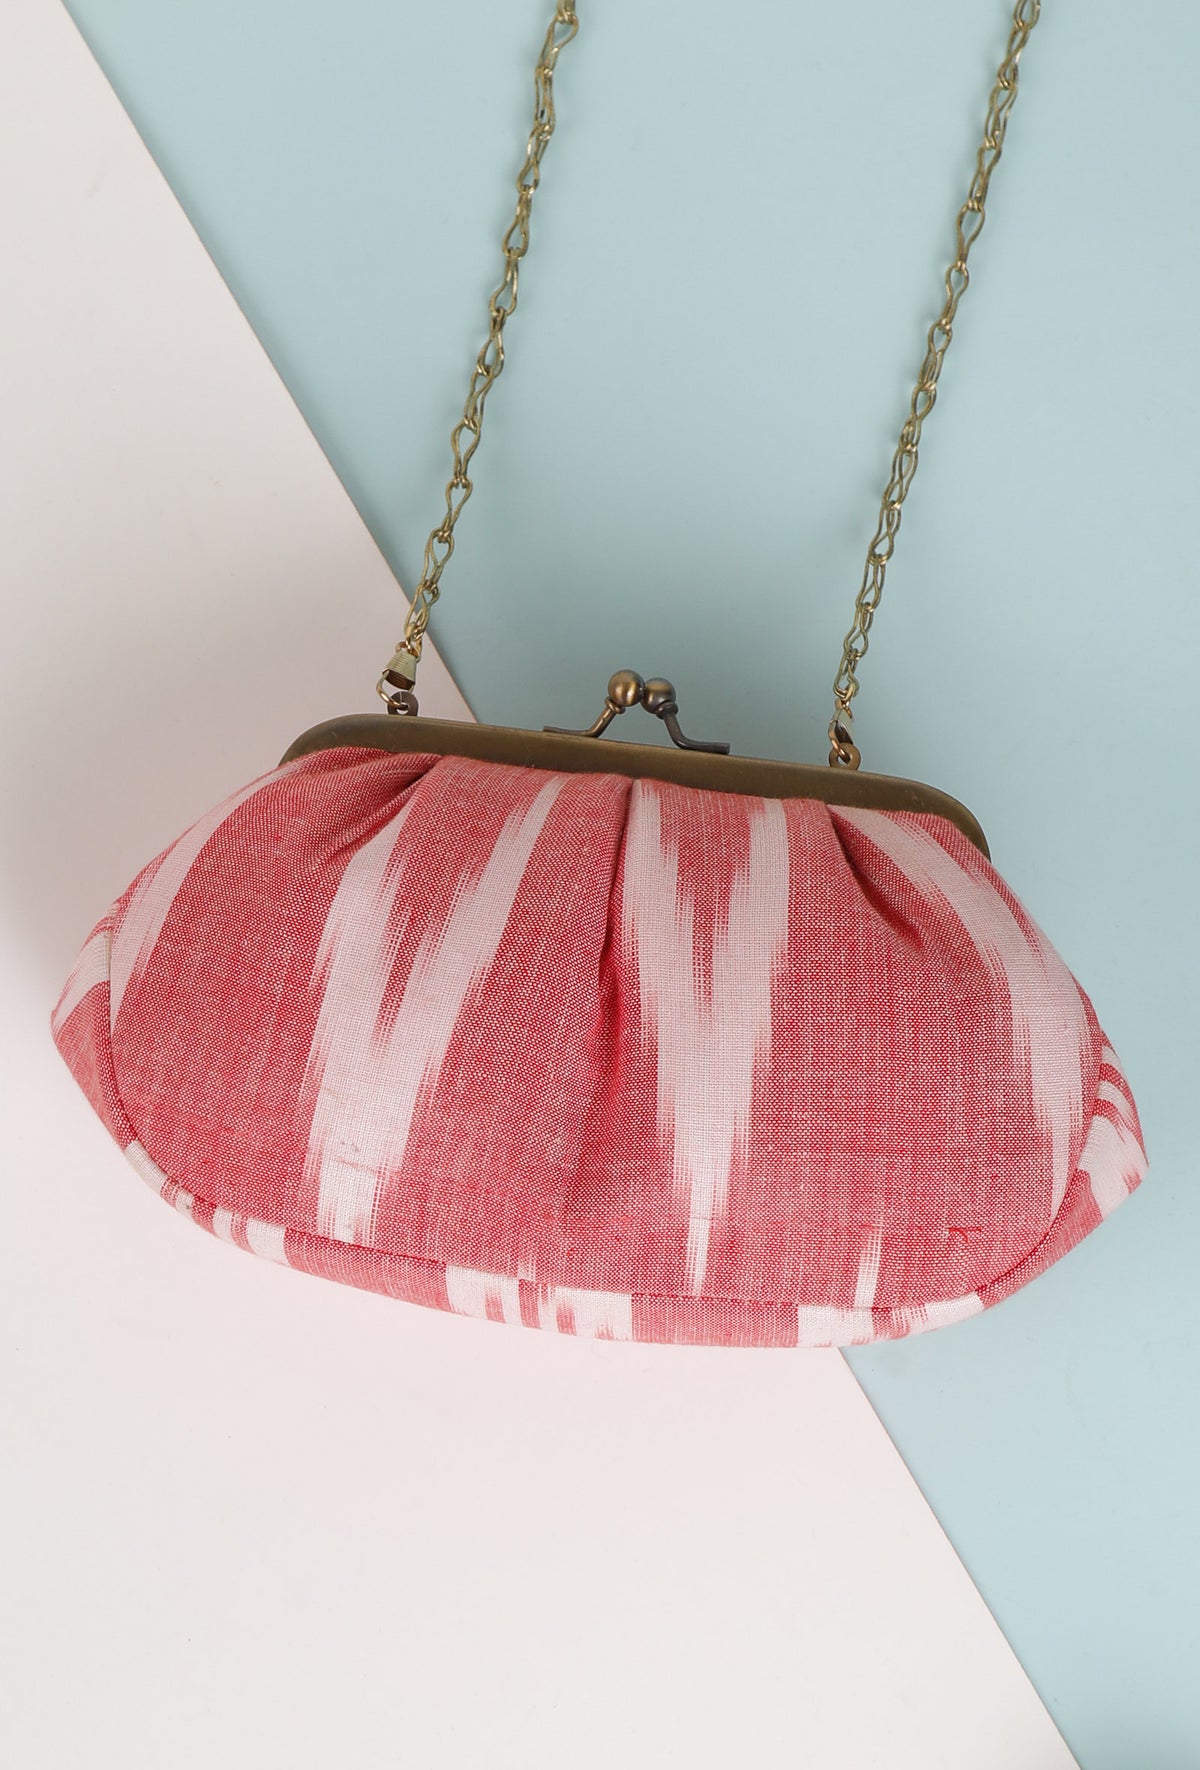 Rose Pink Ikat Clutch Bag